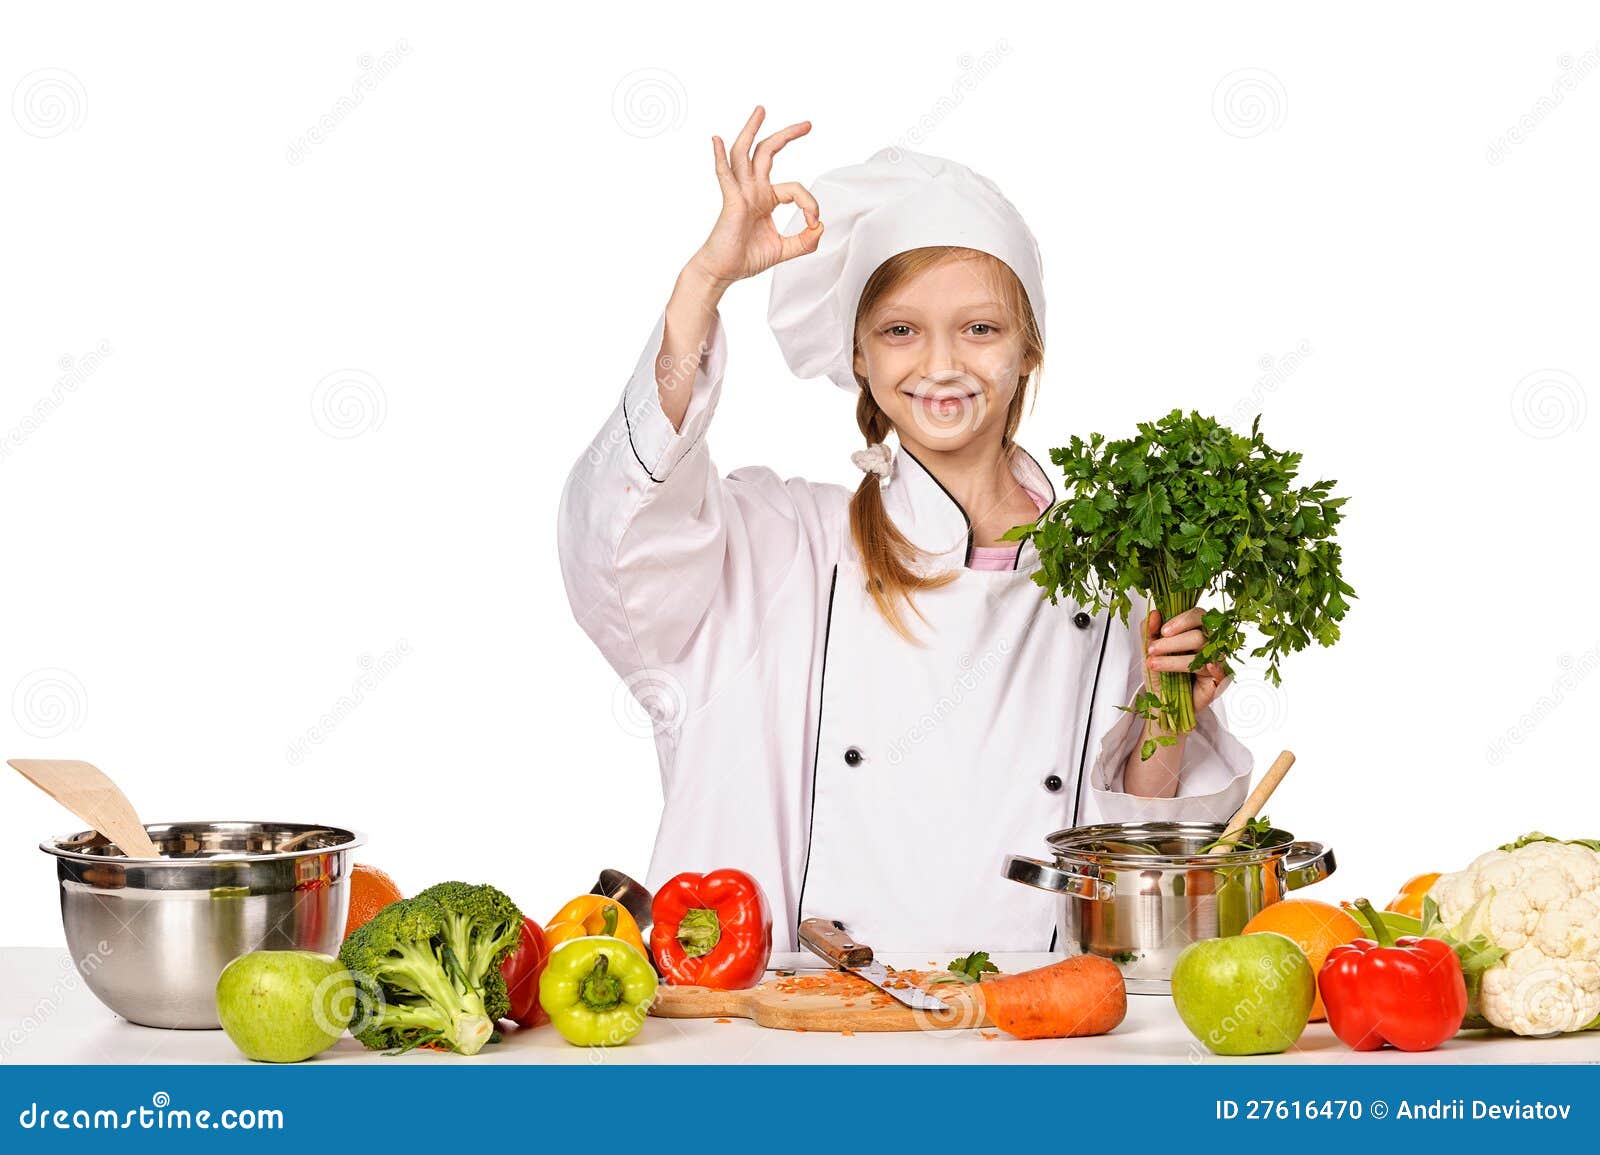 https://thumbs.dreamstime.com/z/happy-little-chef-girl-parsley-showing-ok-27616470.jpg